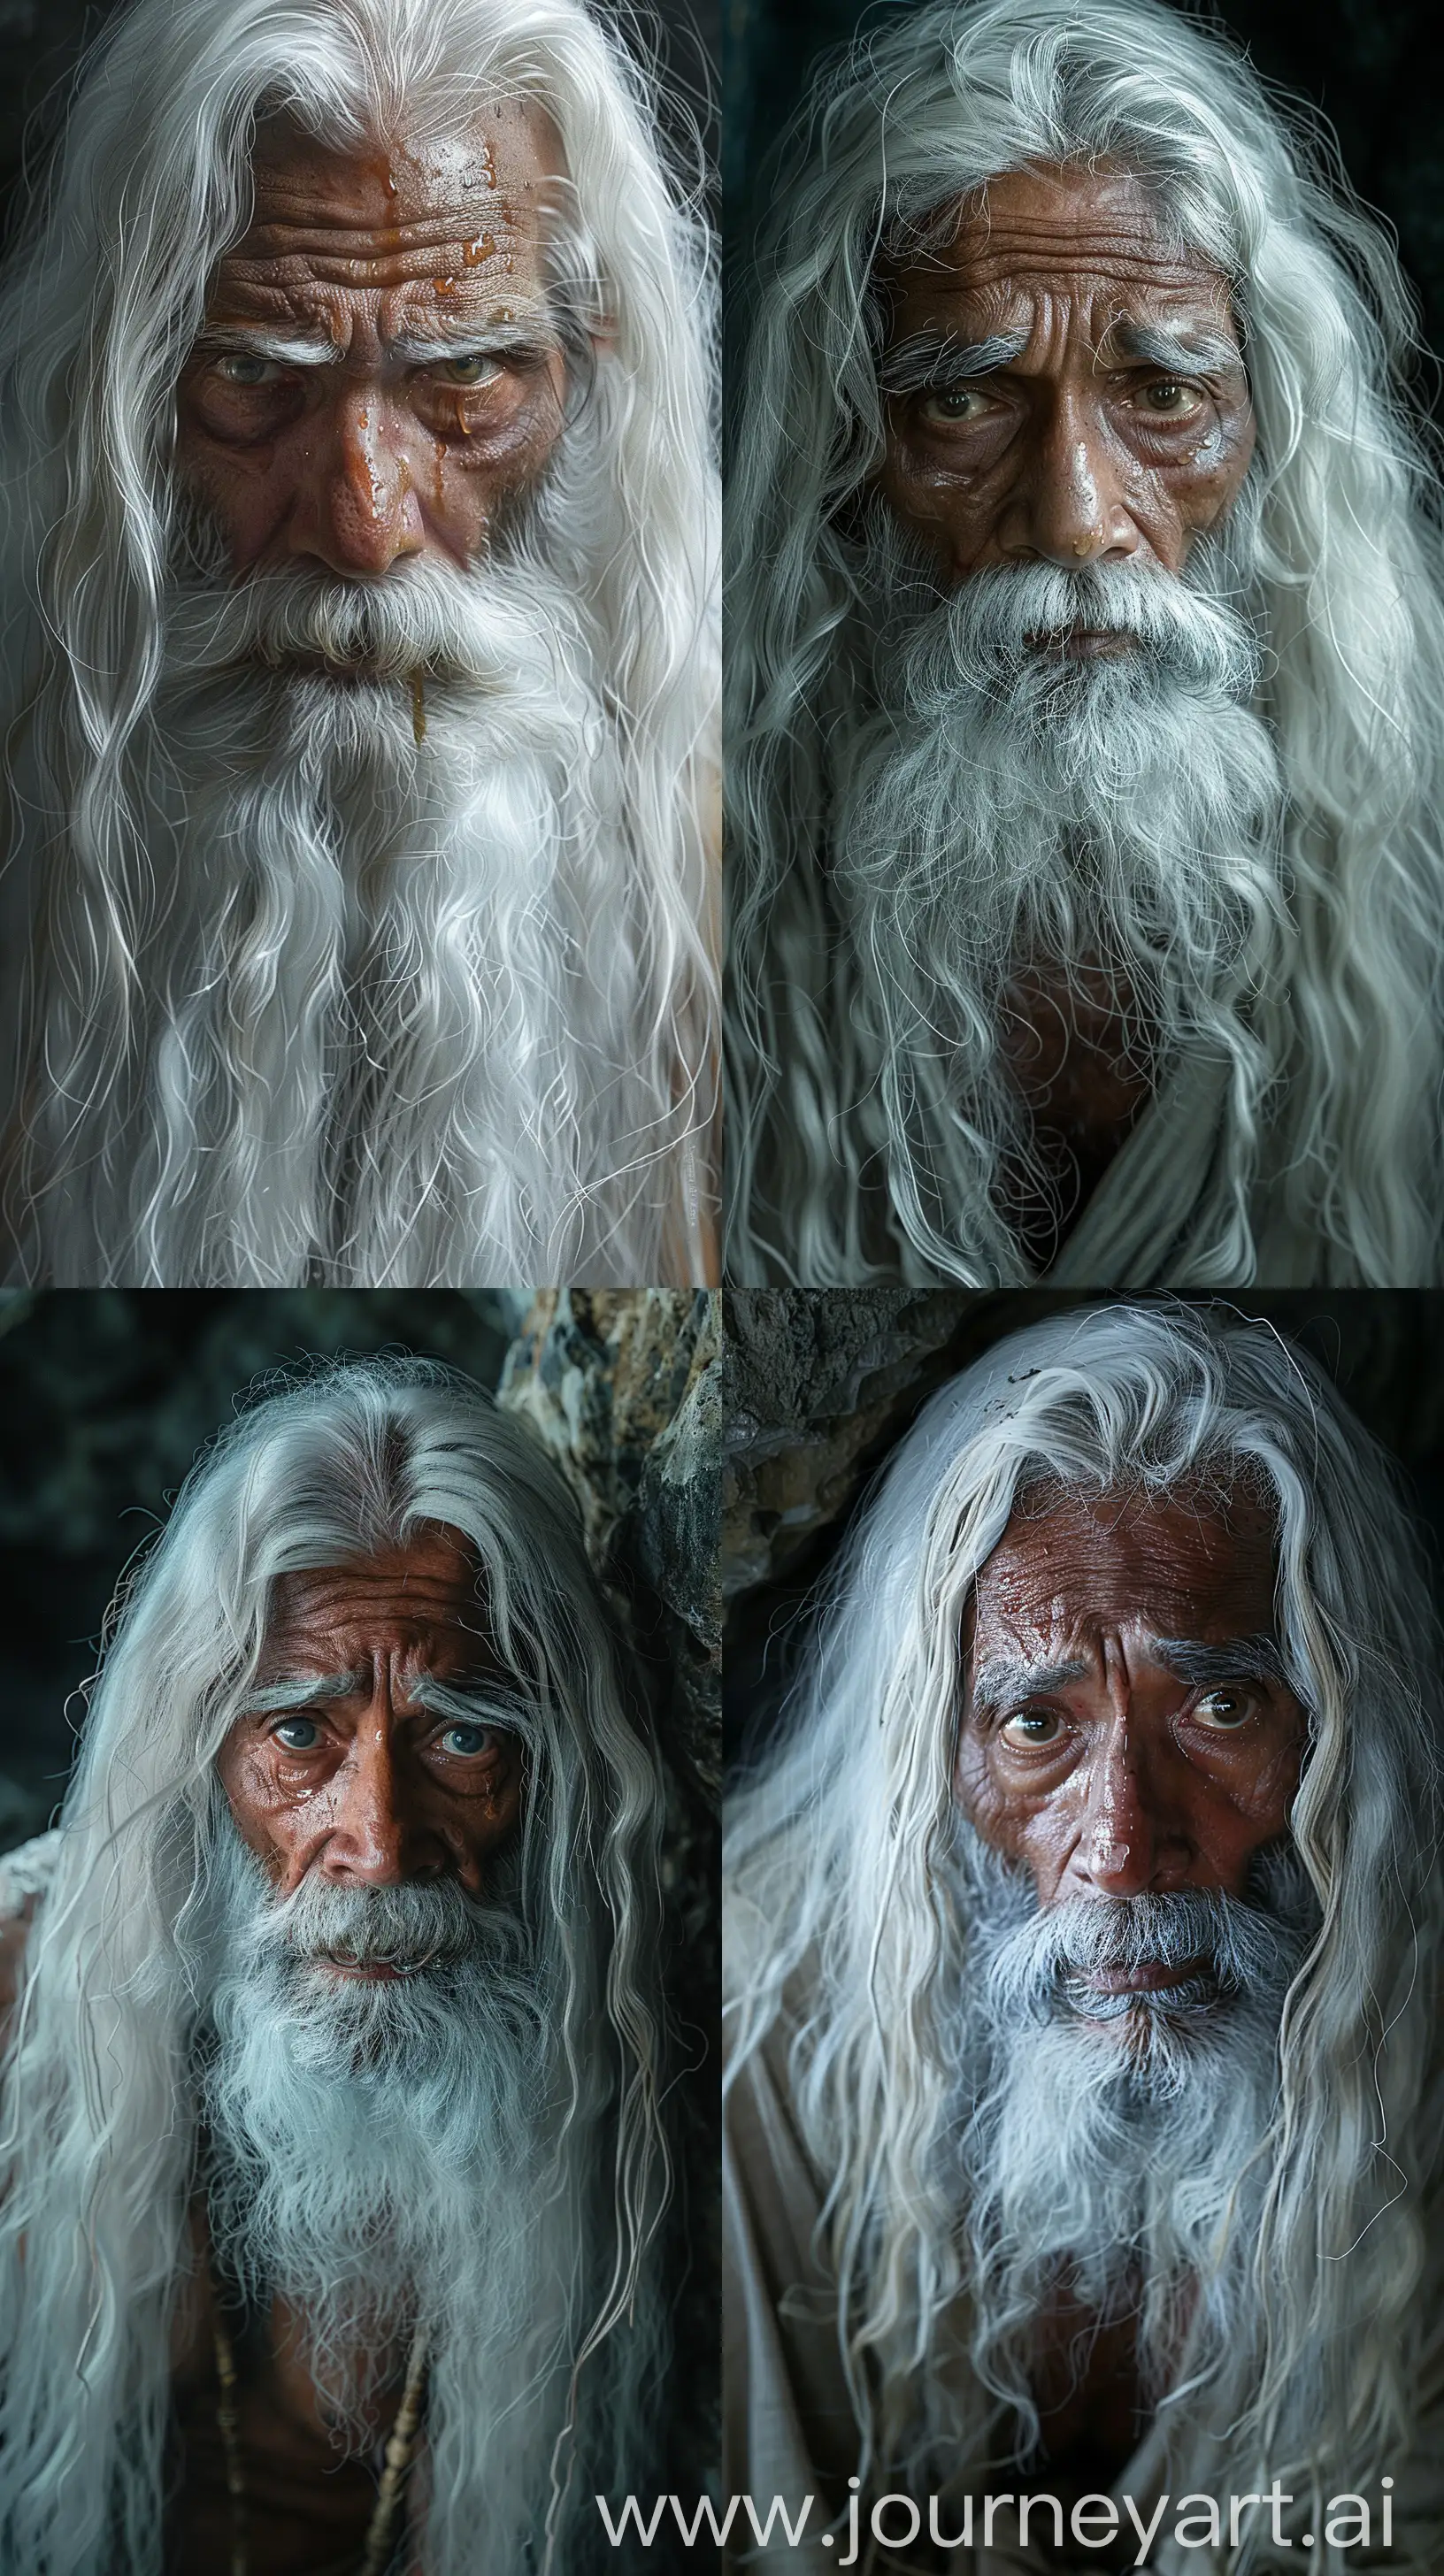 Worried-Elderly-Indian-Sage-Trapped-in-Dark-Cave-Seeking-Escape